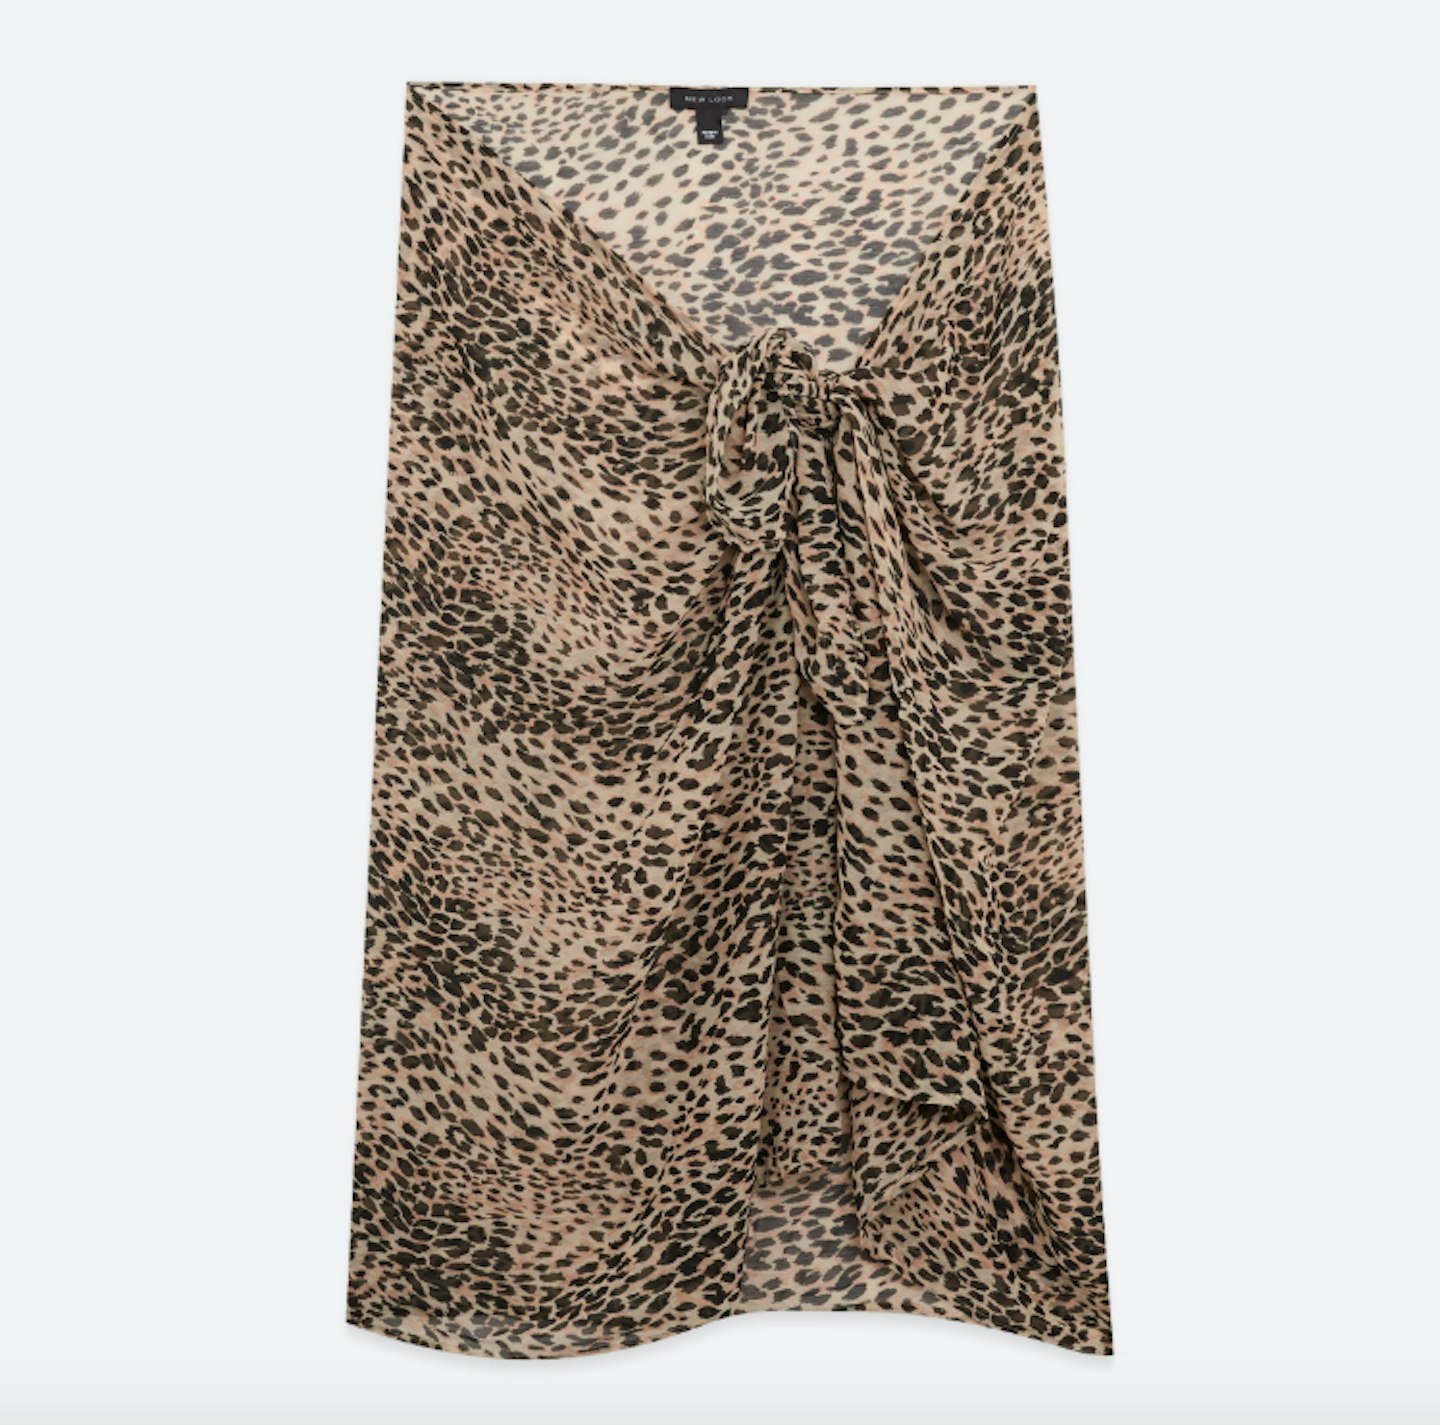 New Look, Leopard Print Sarong, £9.99